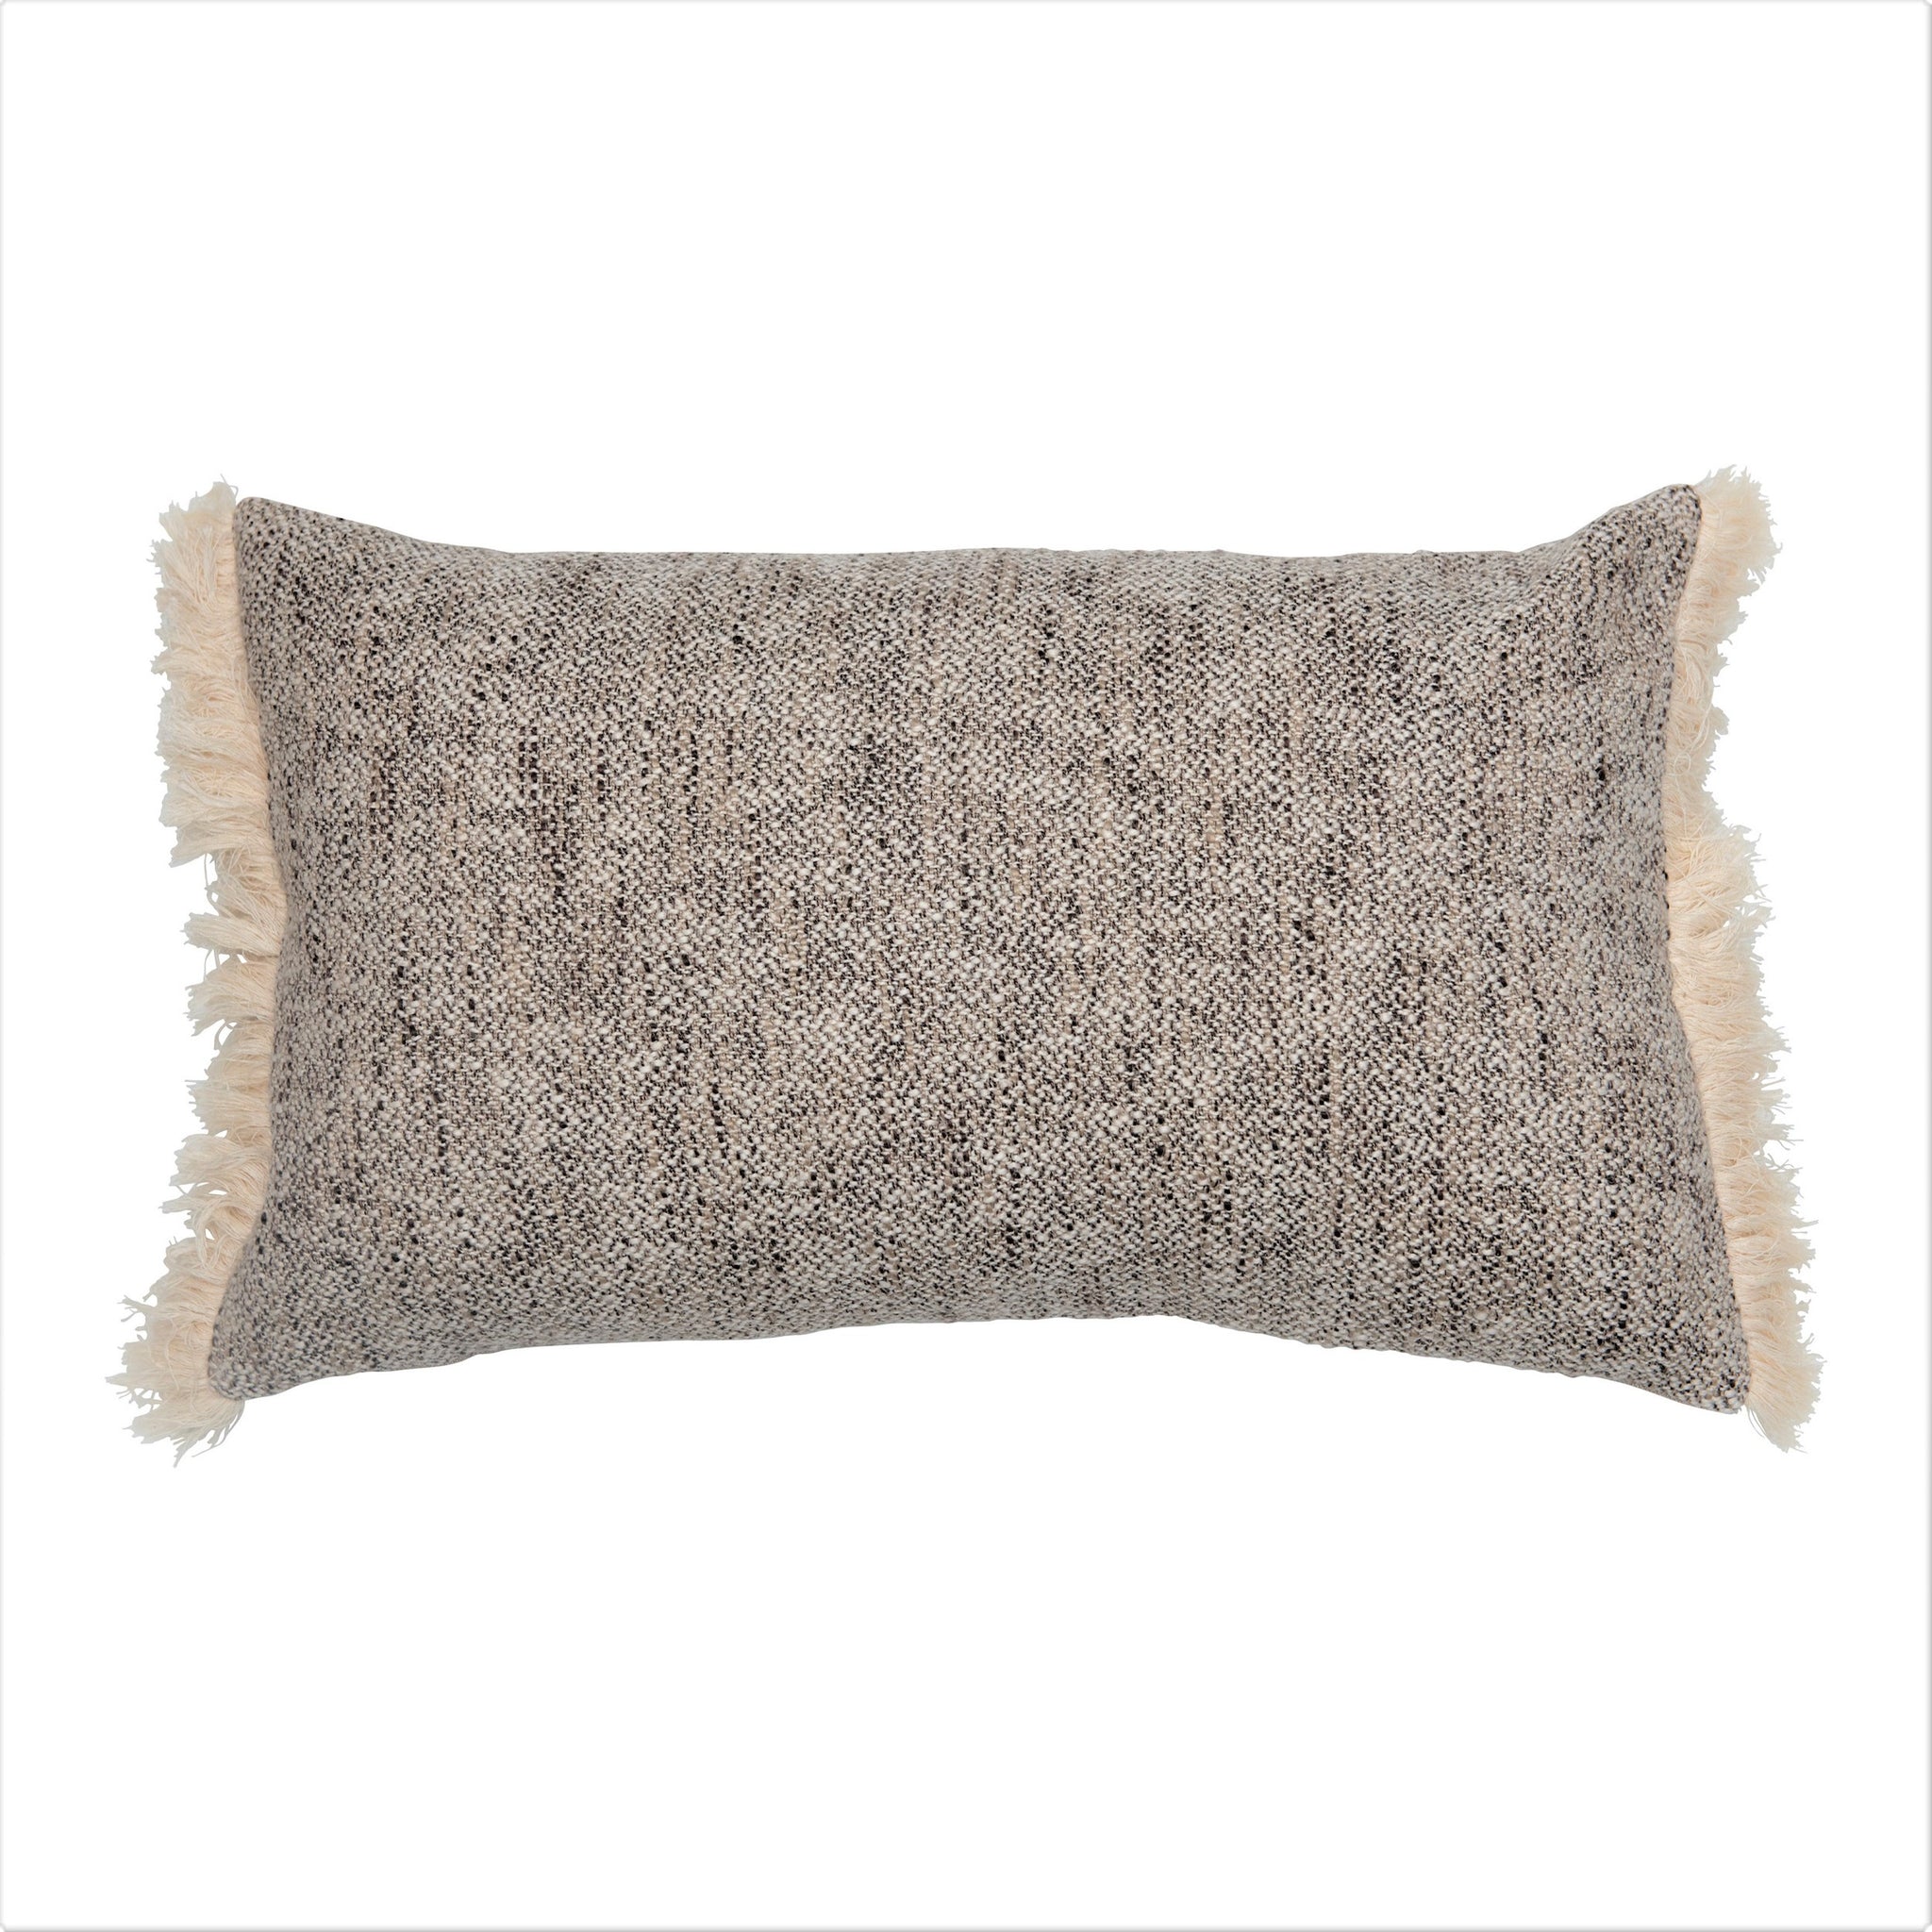 Black & Cream Woven Cotton Fringed Lumbar Pillow, 24"L x 14"H